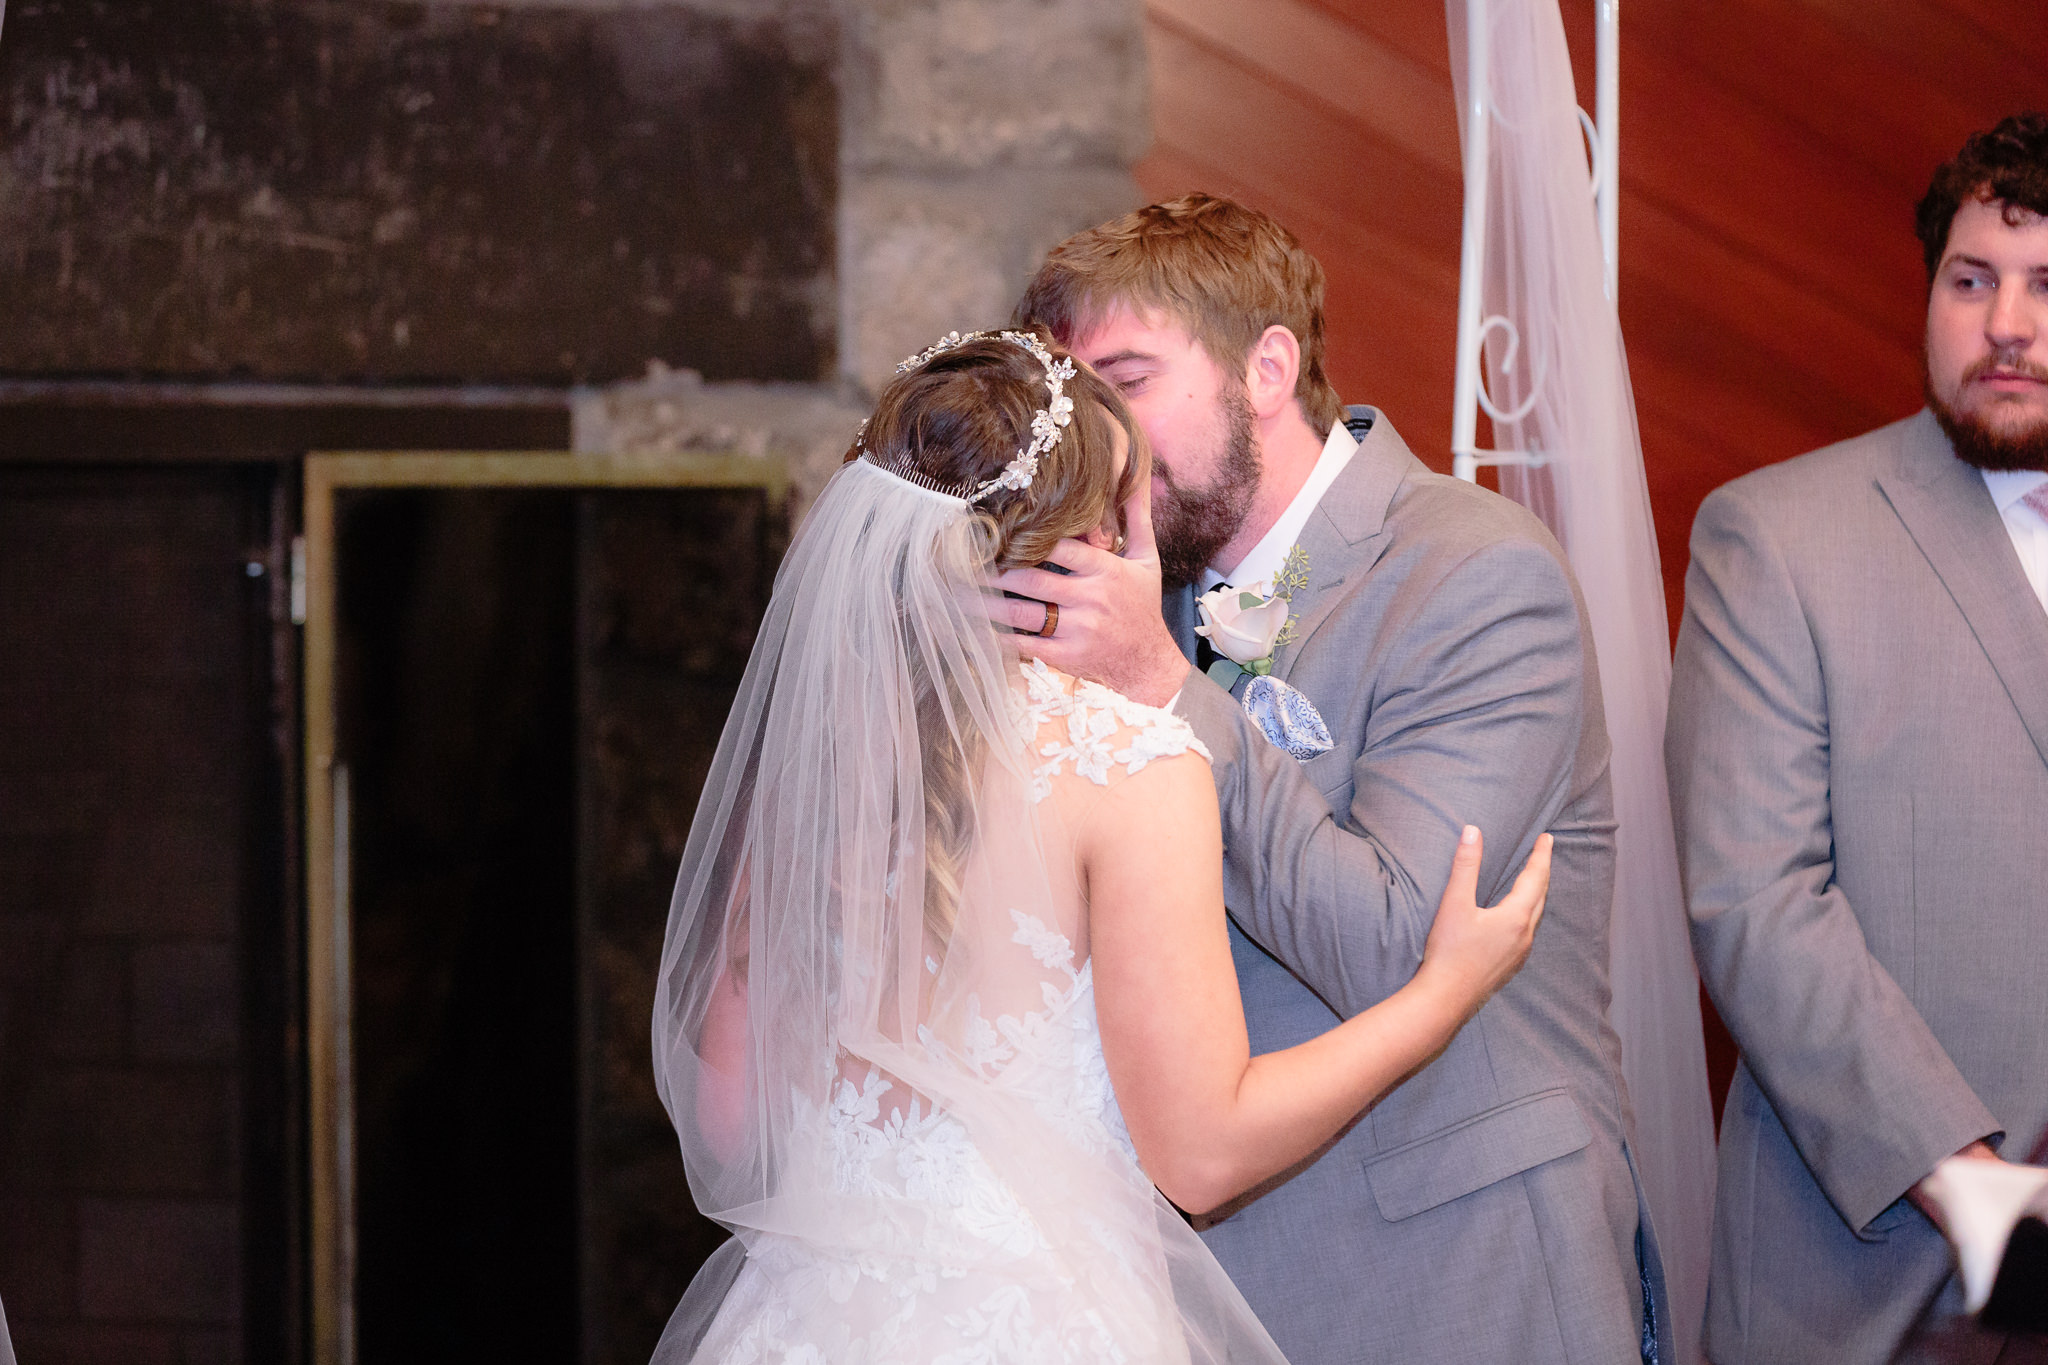 Bride & groom's first kiss at an Oglebay wedding ceremony